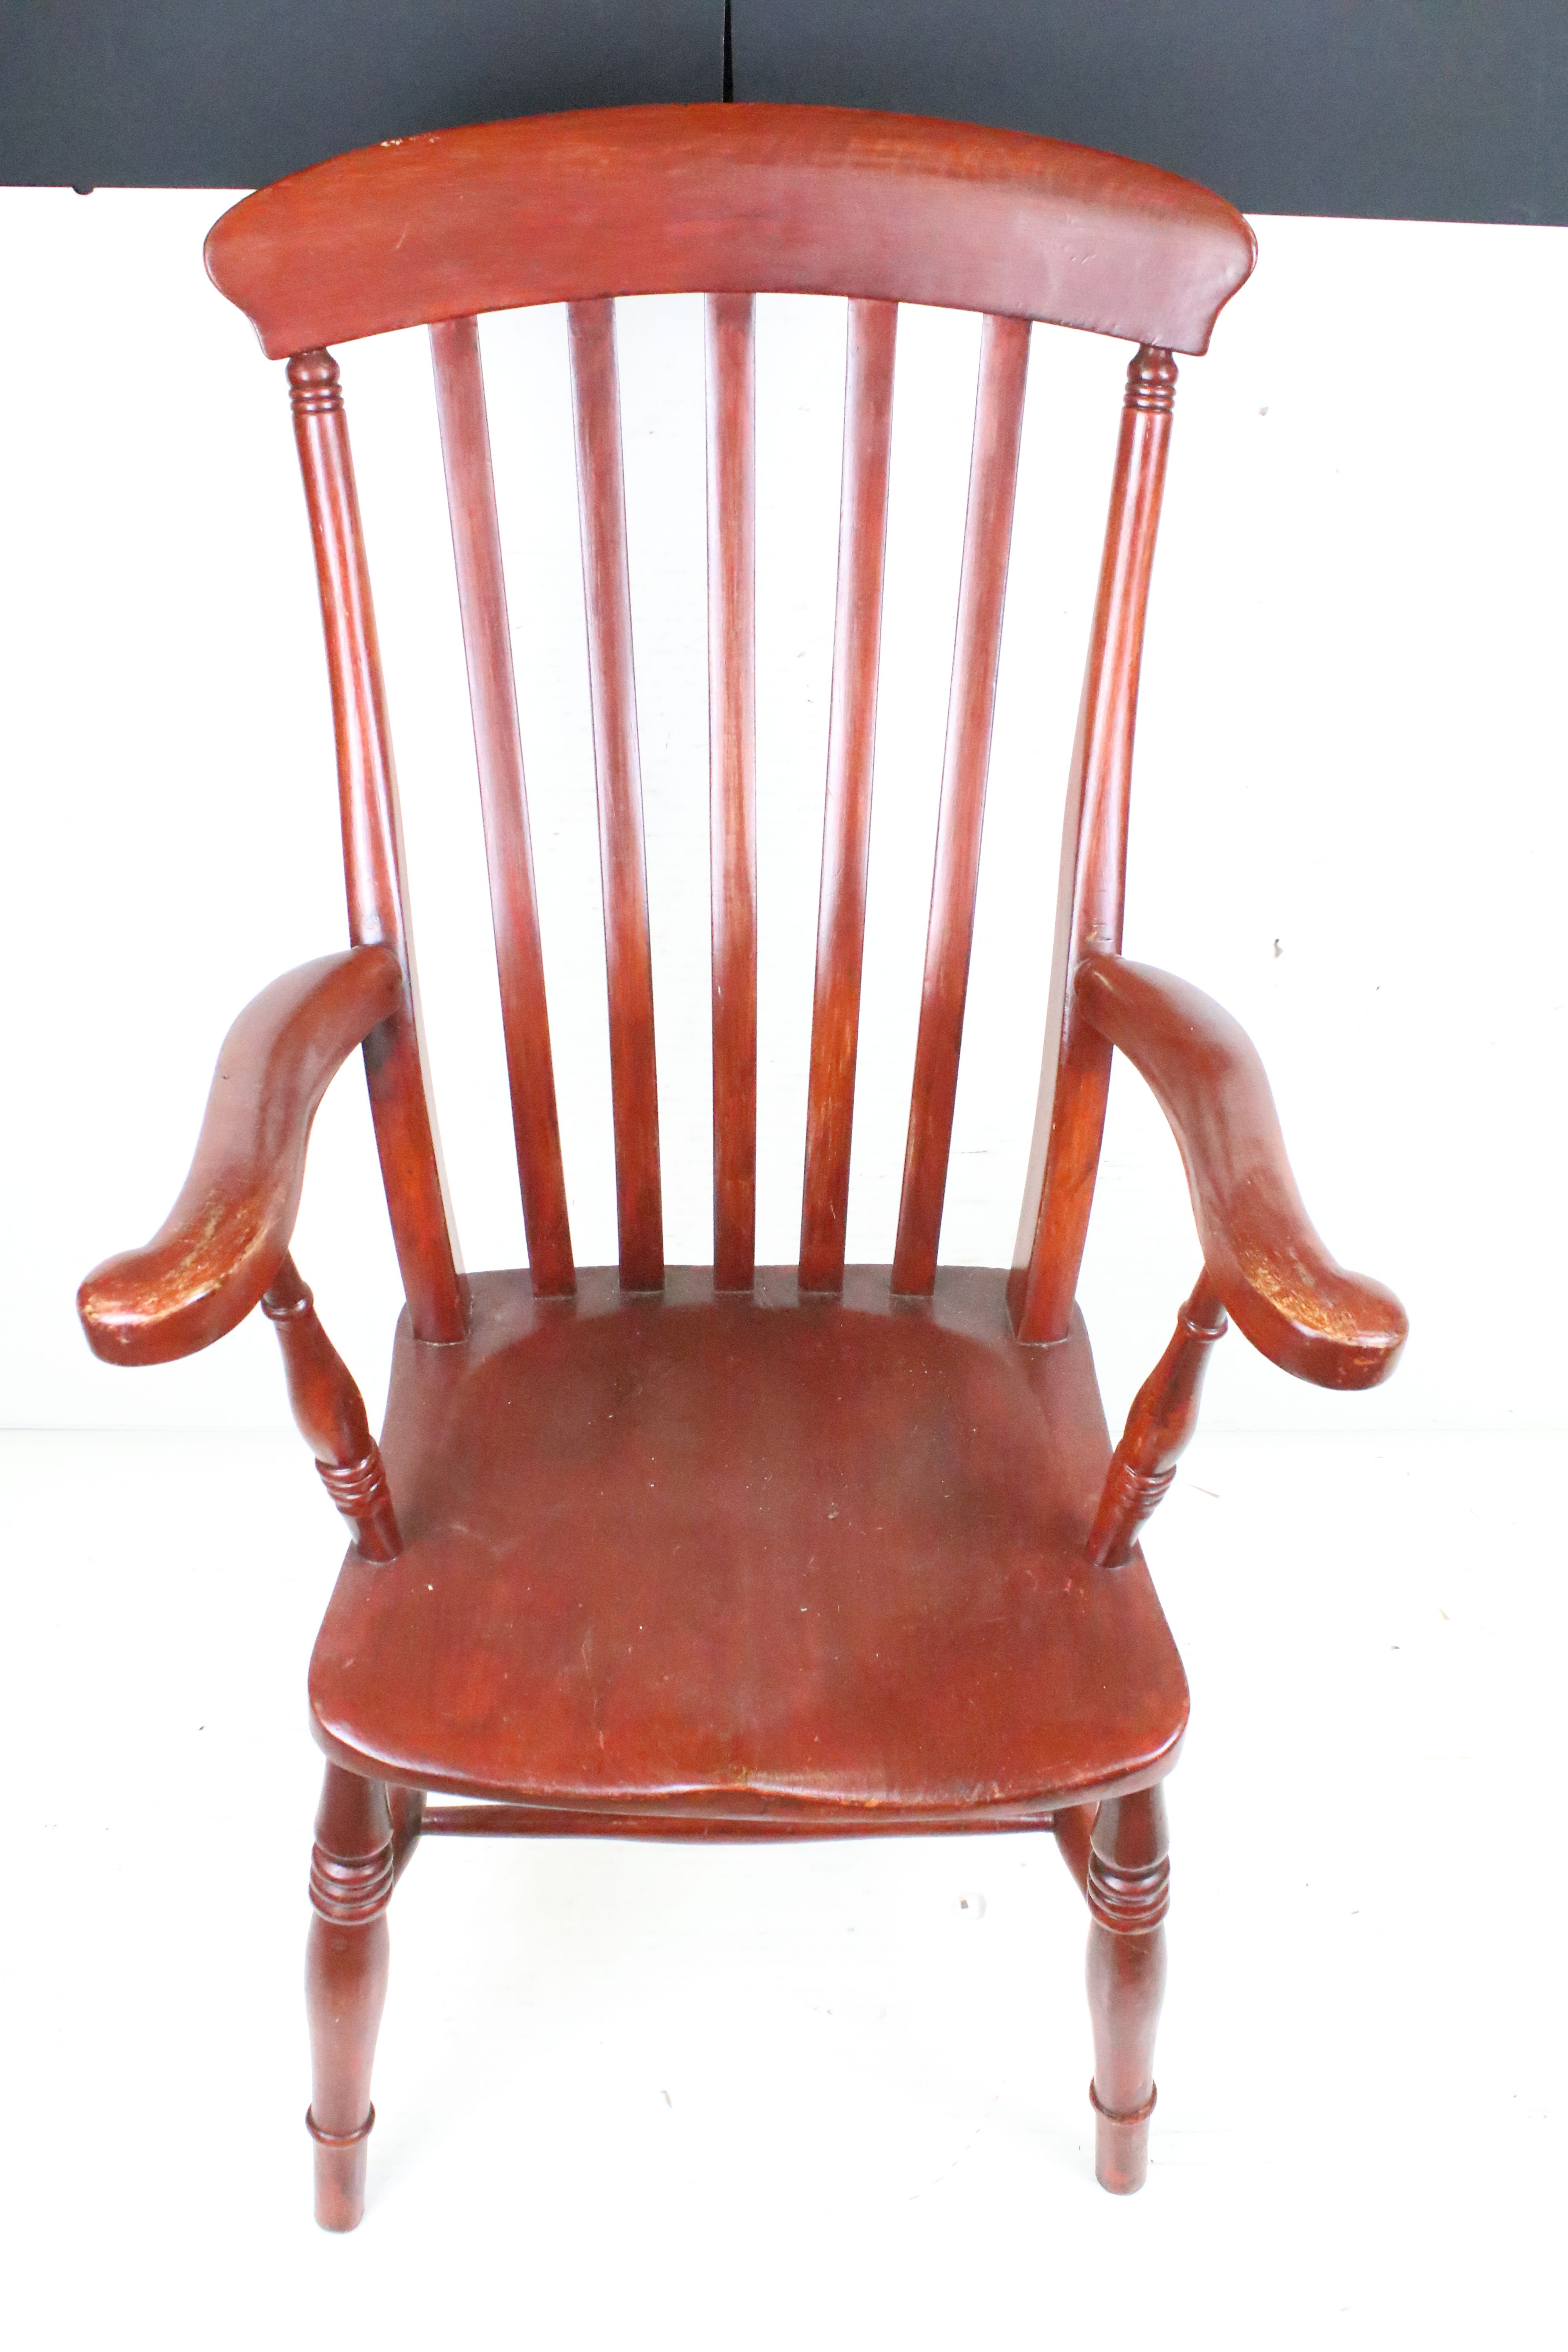 19th century Elm Seated Lathe Back Windsor Elbow Chair, 113cm high x 60cm wide x 53cm deep - Image 2 of 4